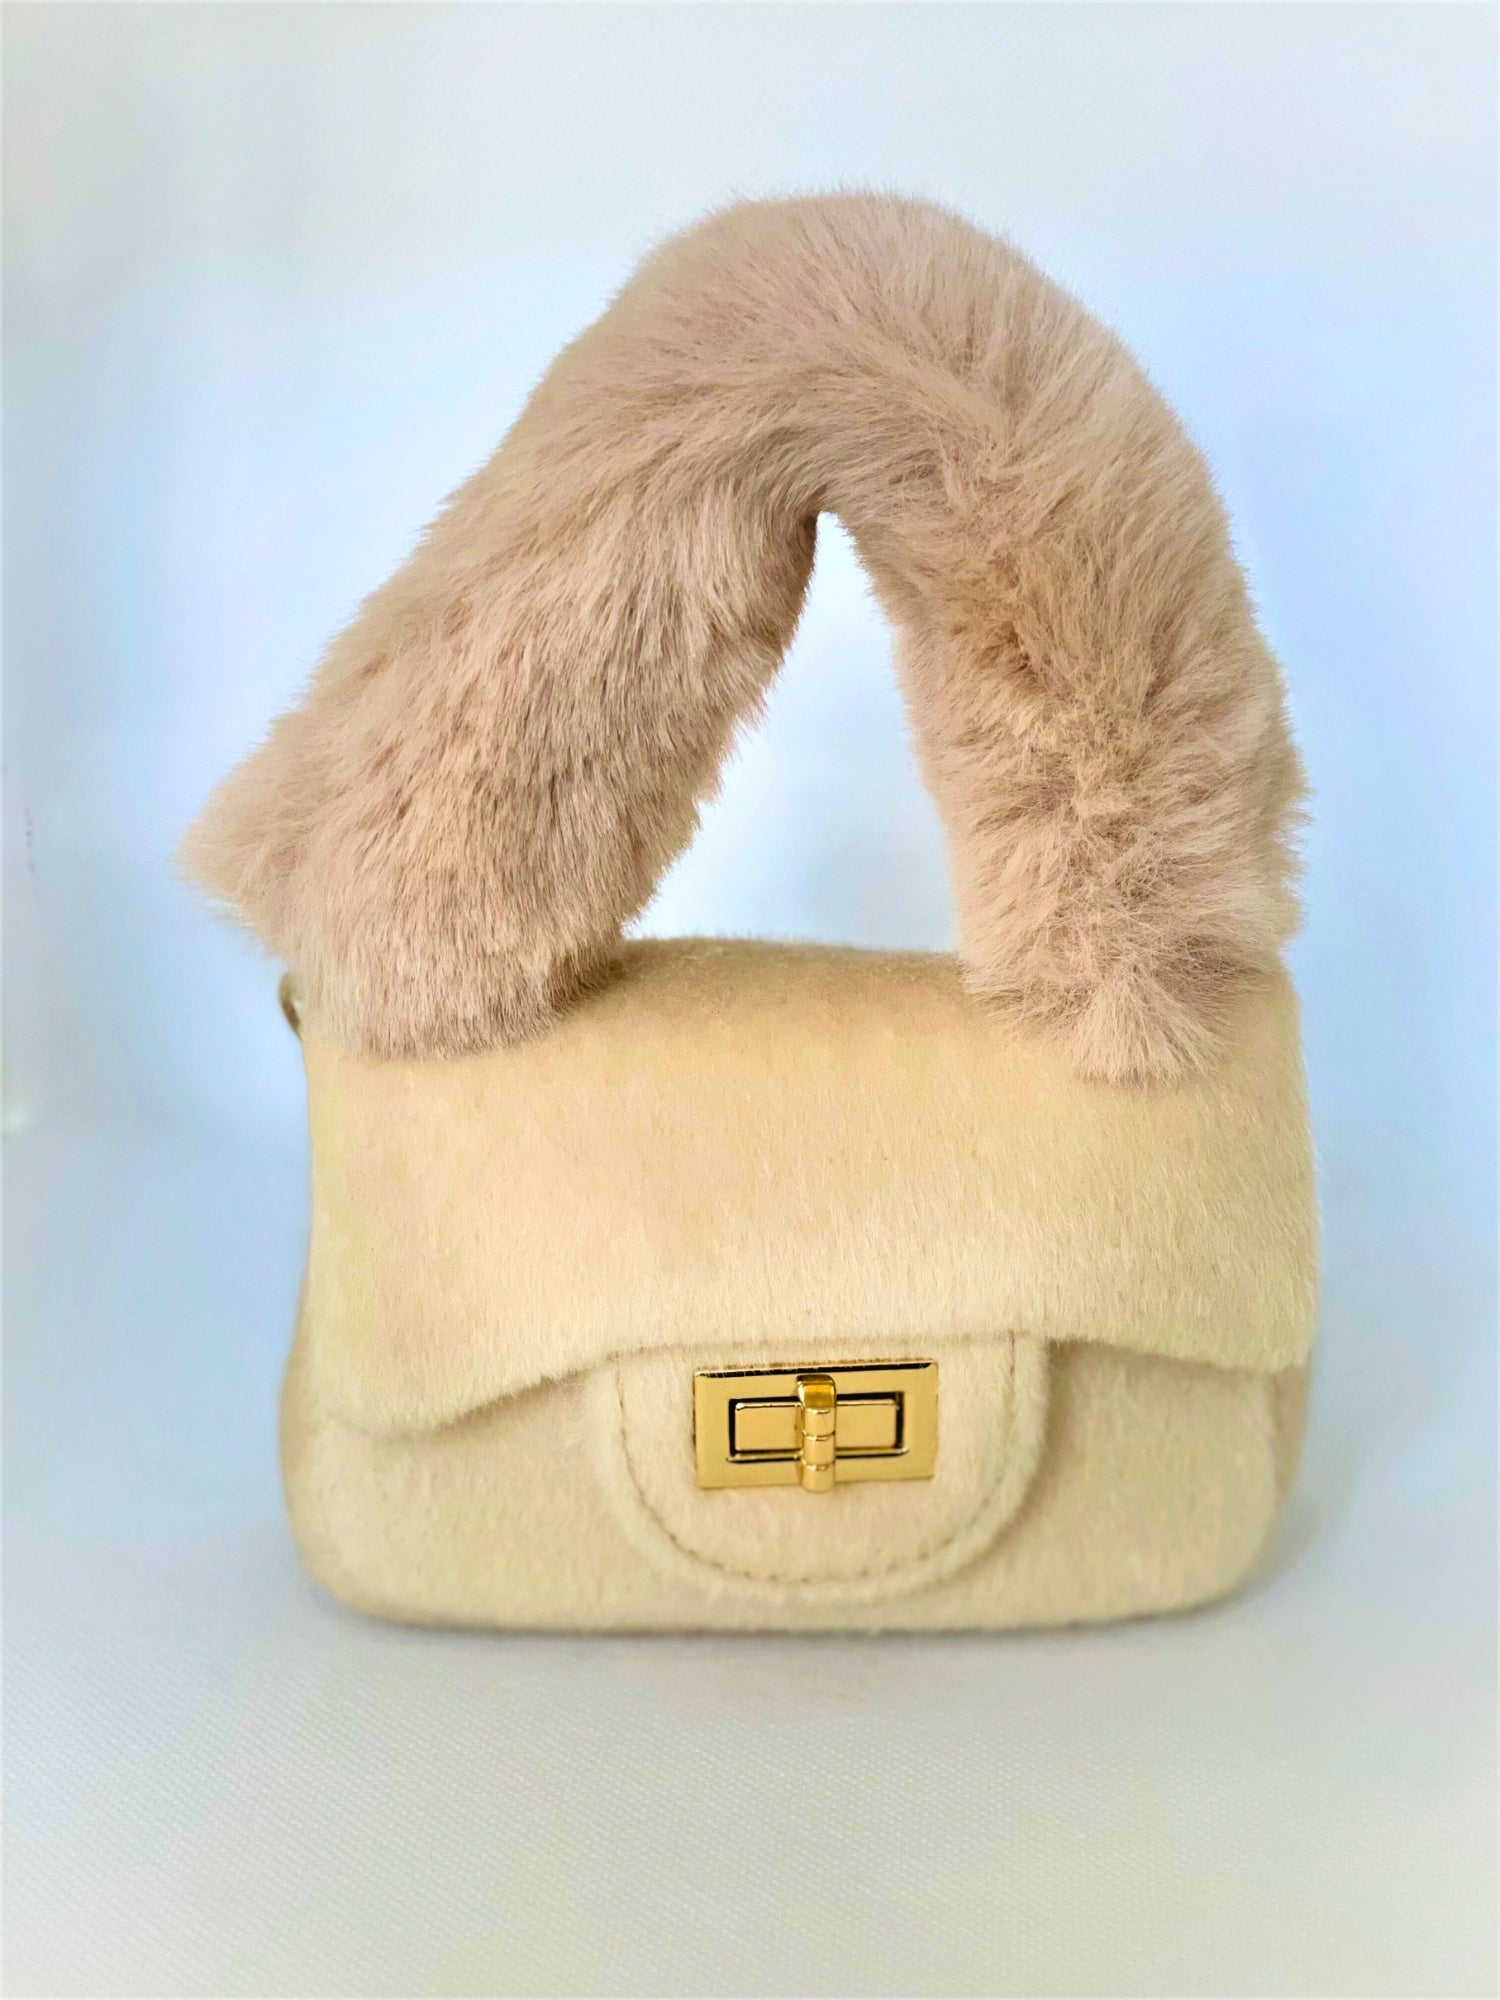 The Petit Agneau Micro Handbag, Purse, Cececo - Ivory Sheep Collection Limited